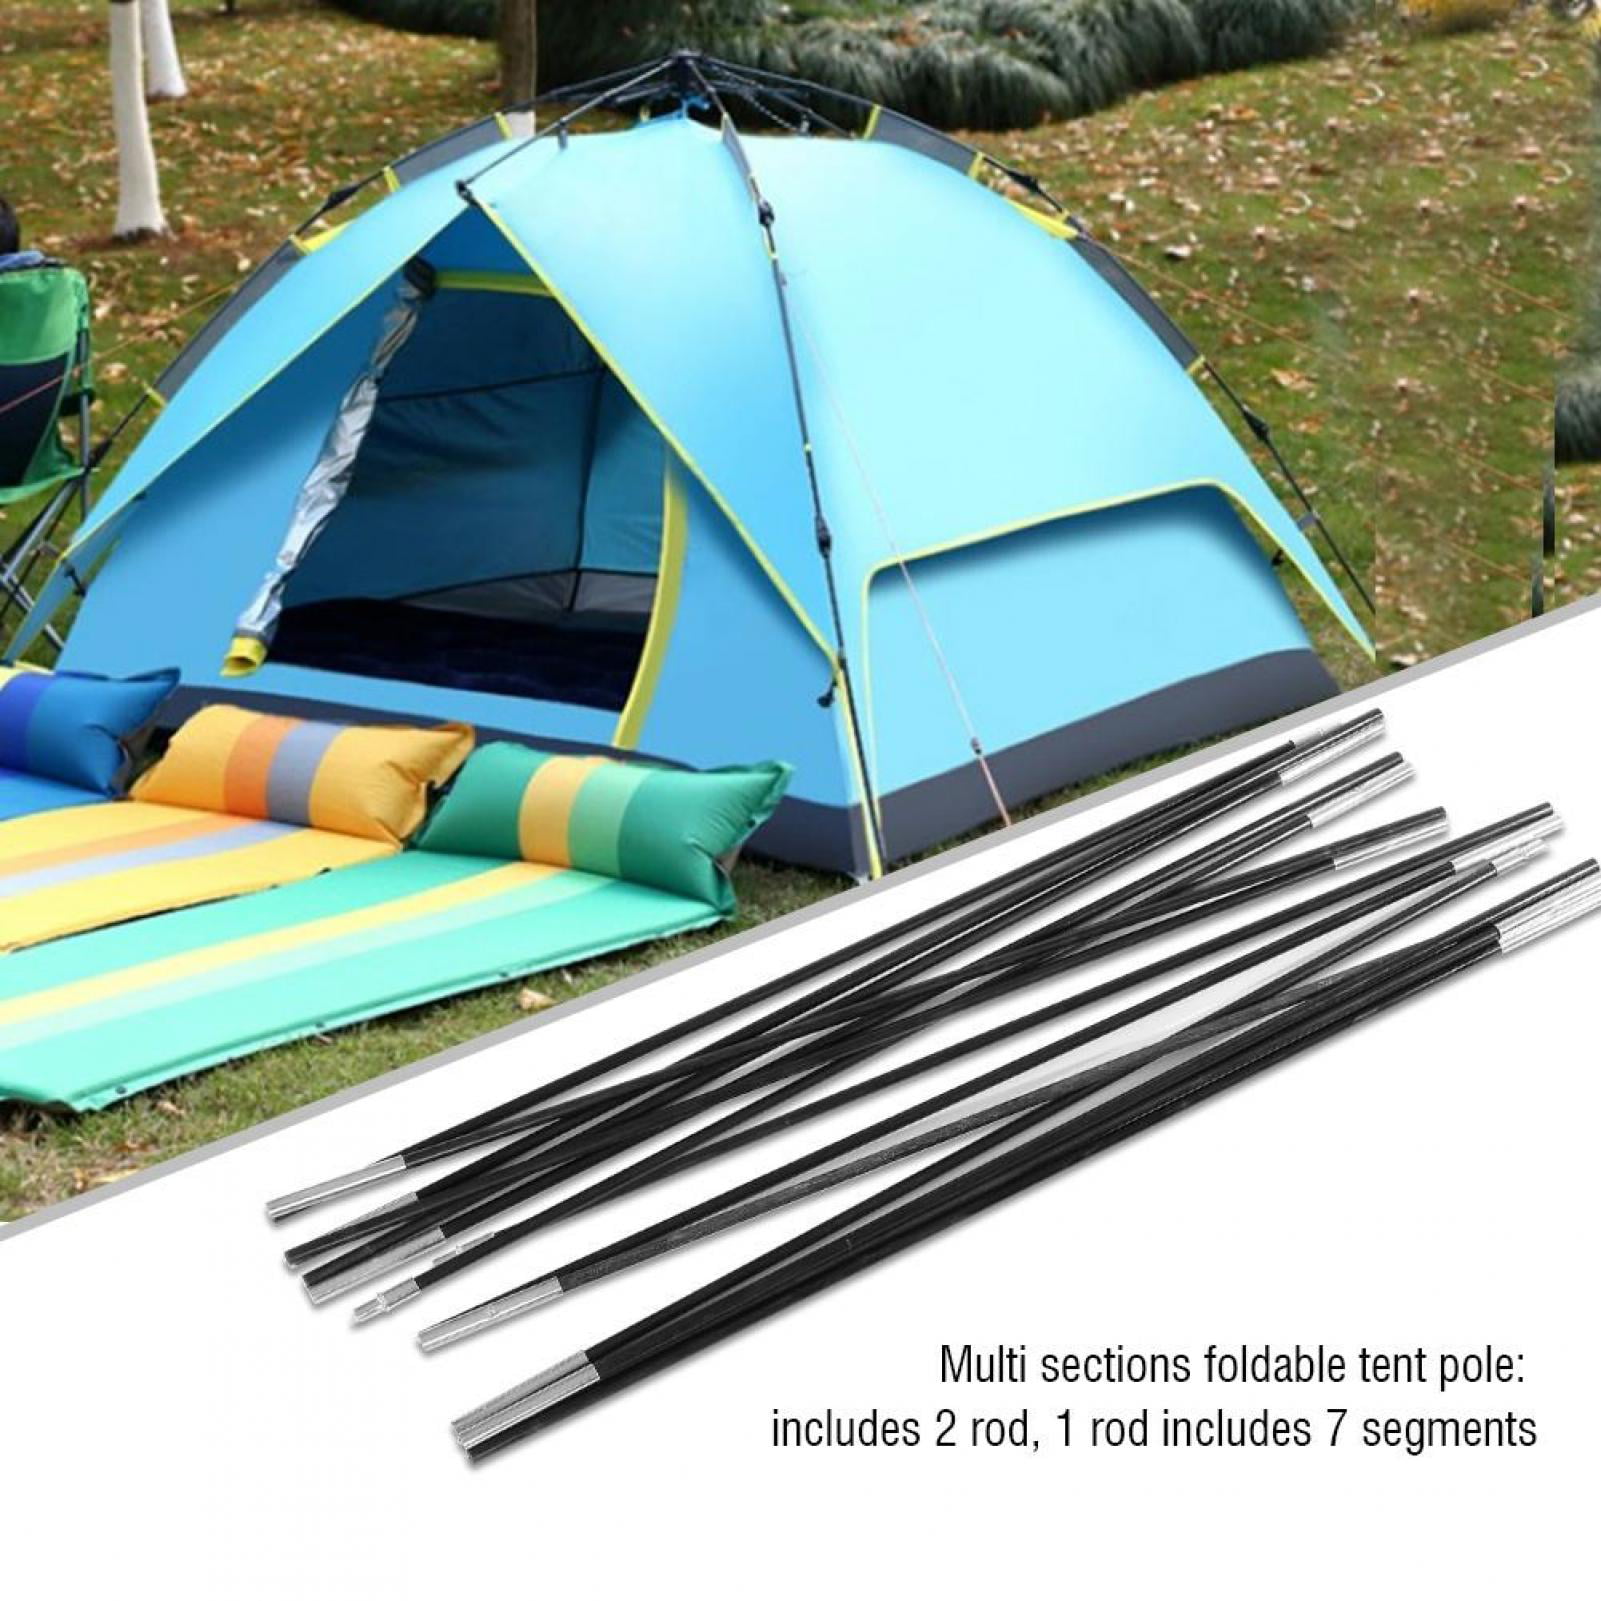 2M Double Tent for ReplacingTent Poles for Outdoor Activities minifinker Fibreglass Pole Kit Fiberglass Camping Tent Pole Made Of Fiberglass for 2